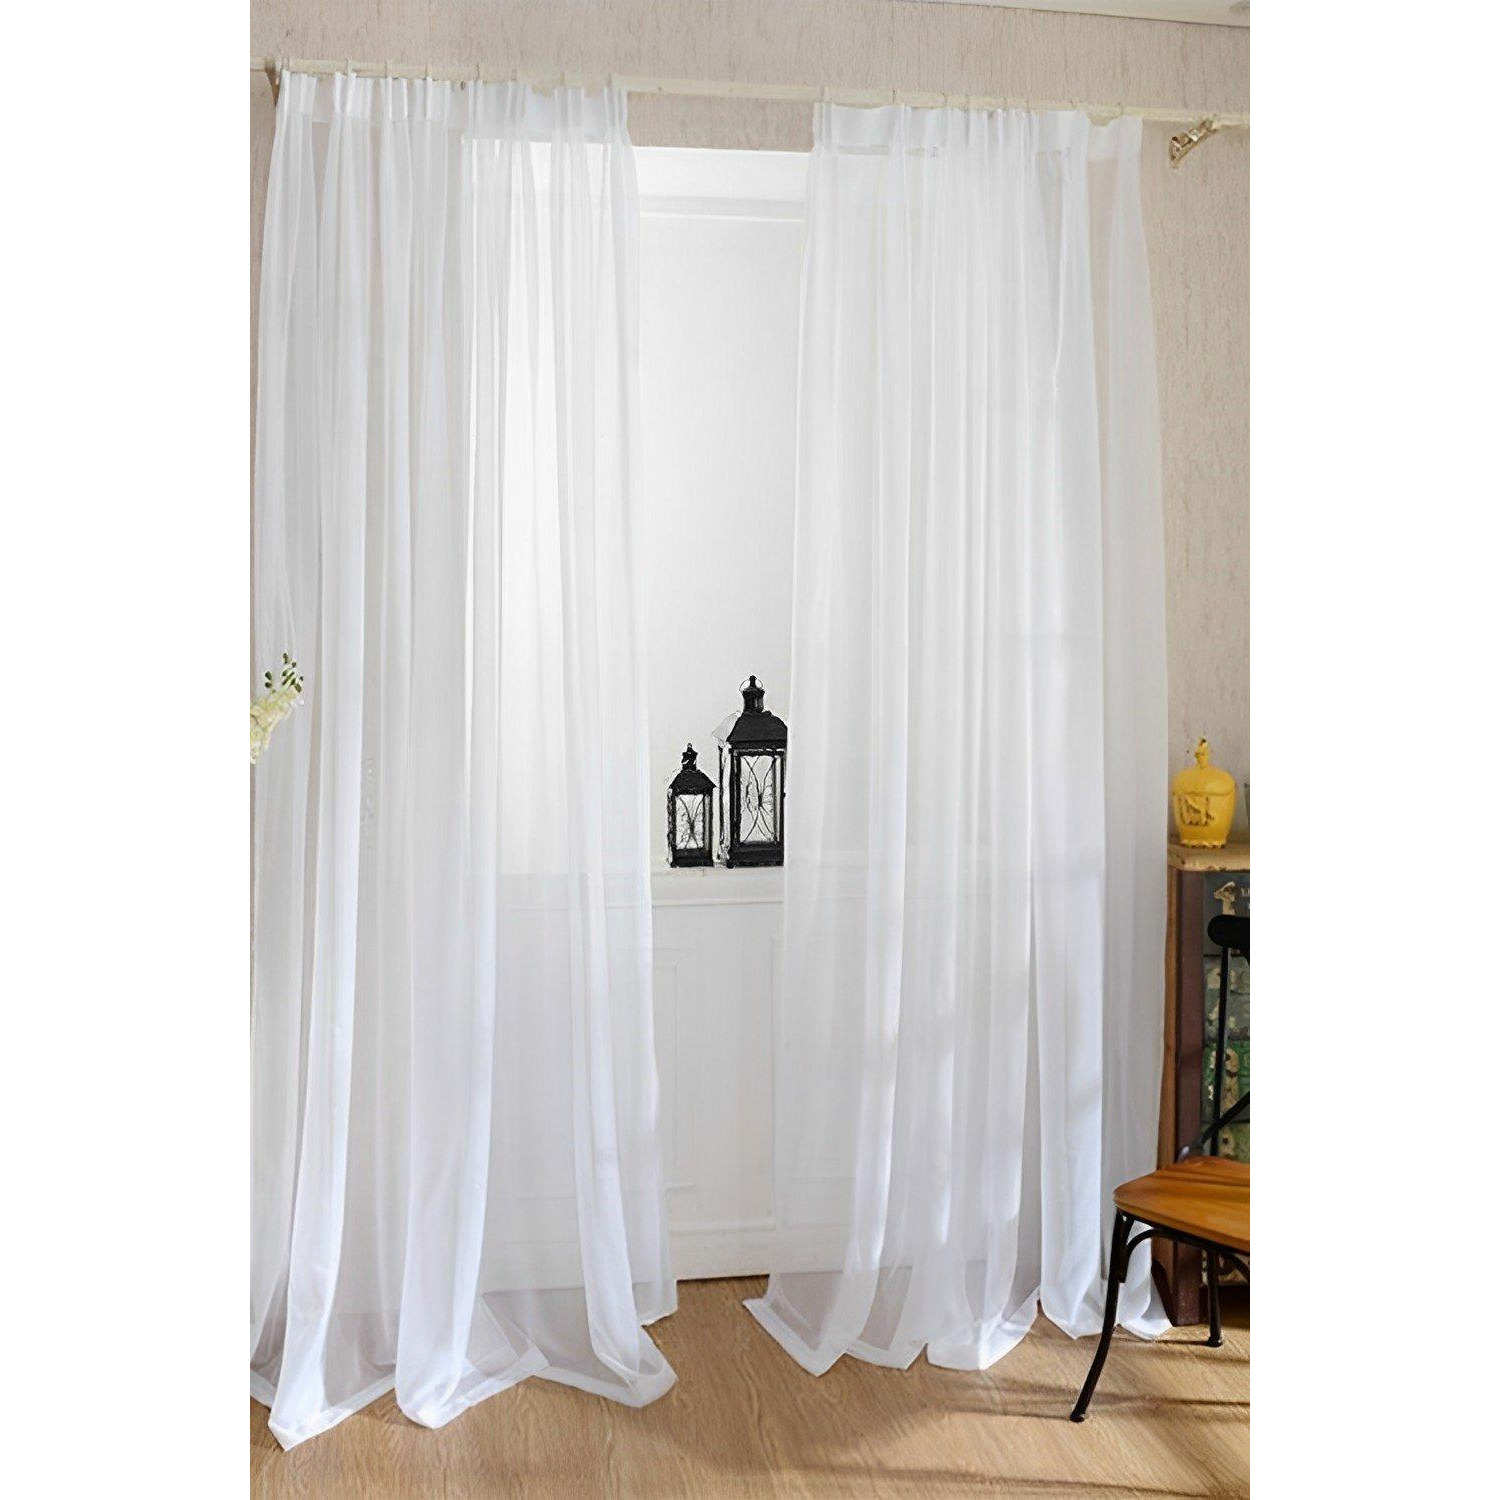 100cm W x 200cm H Sheer Voile Window Curtain - image 1